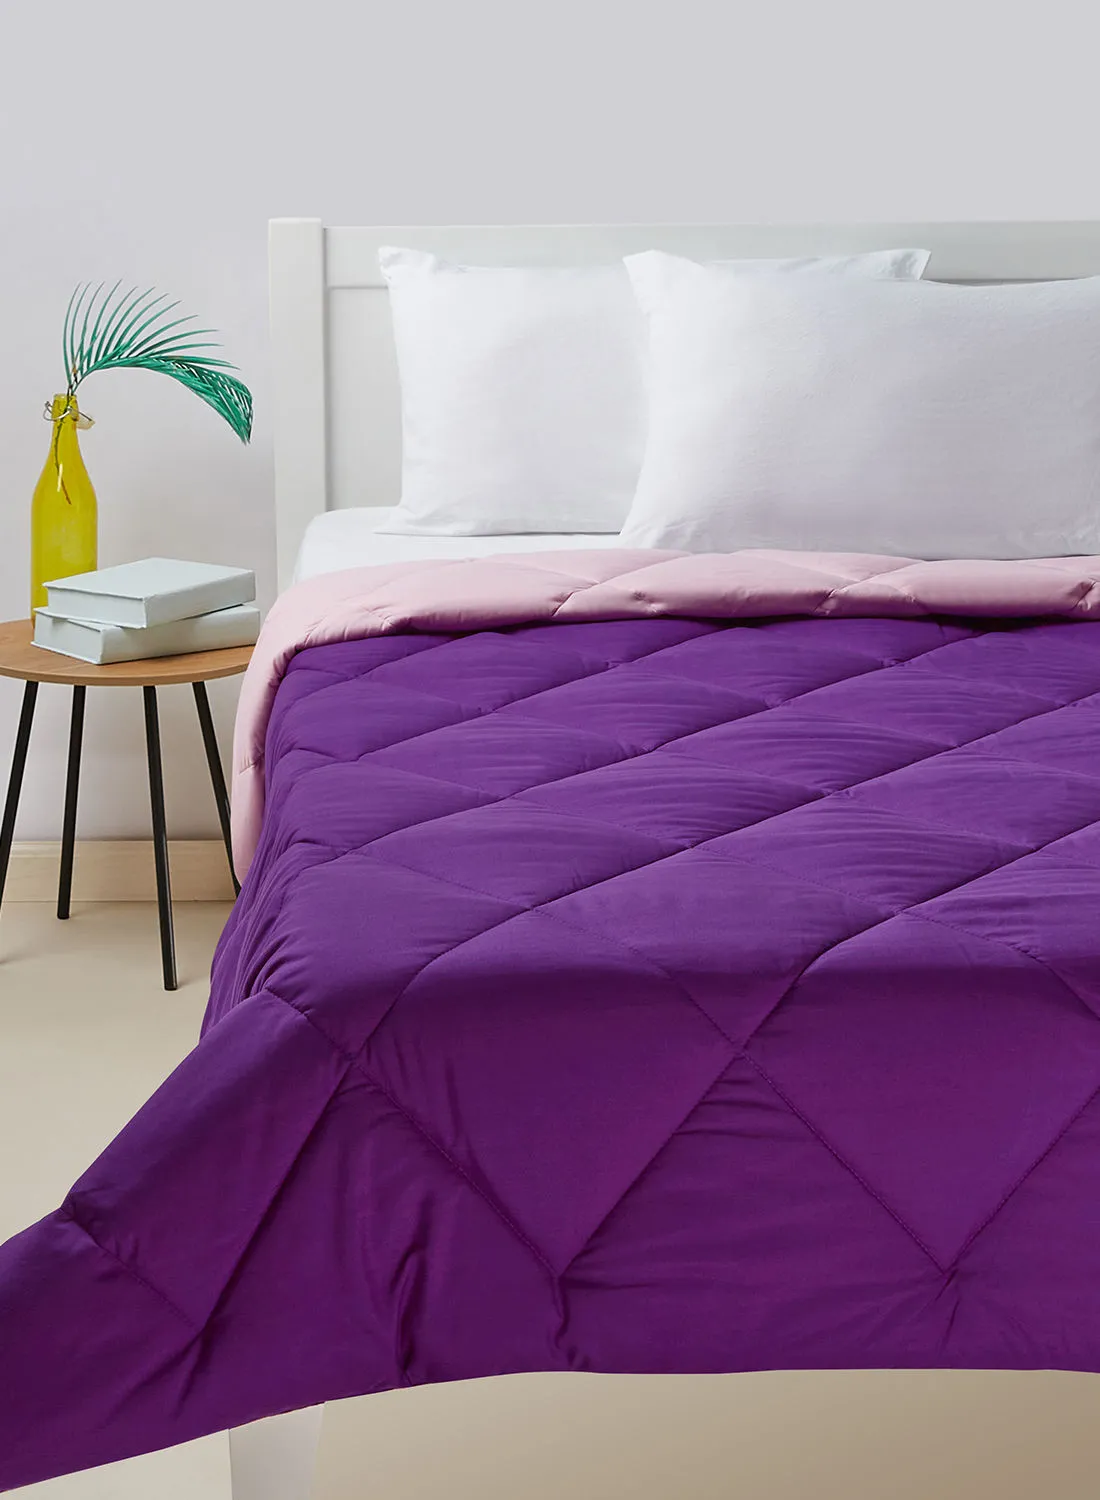 Amal Comforter King Size All Season Everyday Use Bedding Set Extra Soft Microfiber Single Piece Reversible Comforter   Purple/Blush